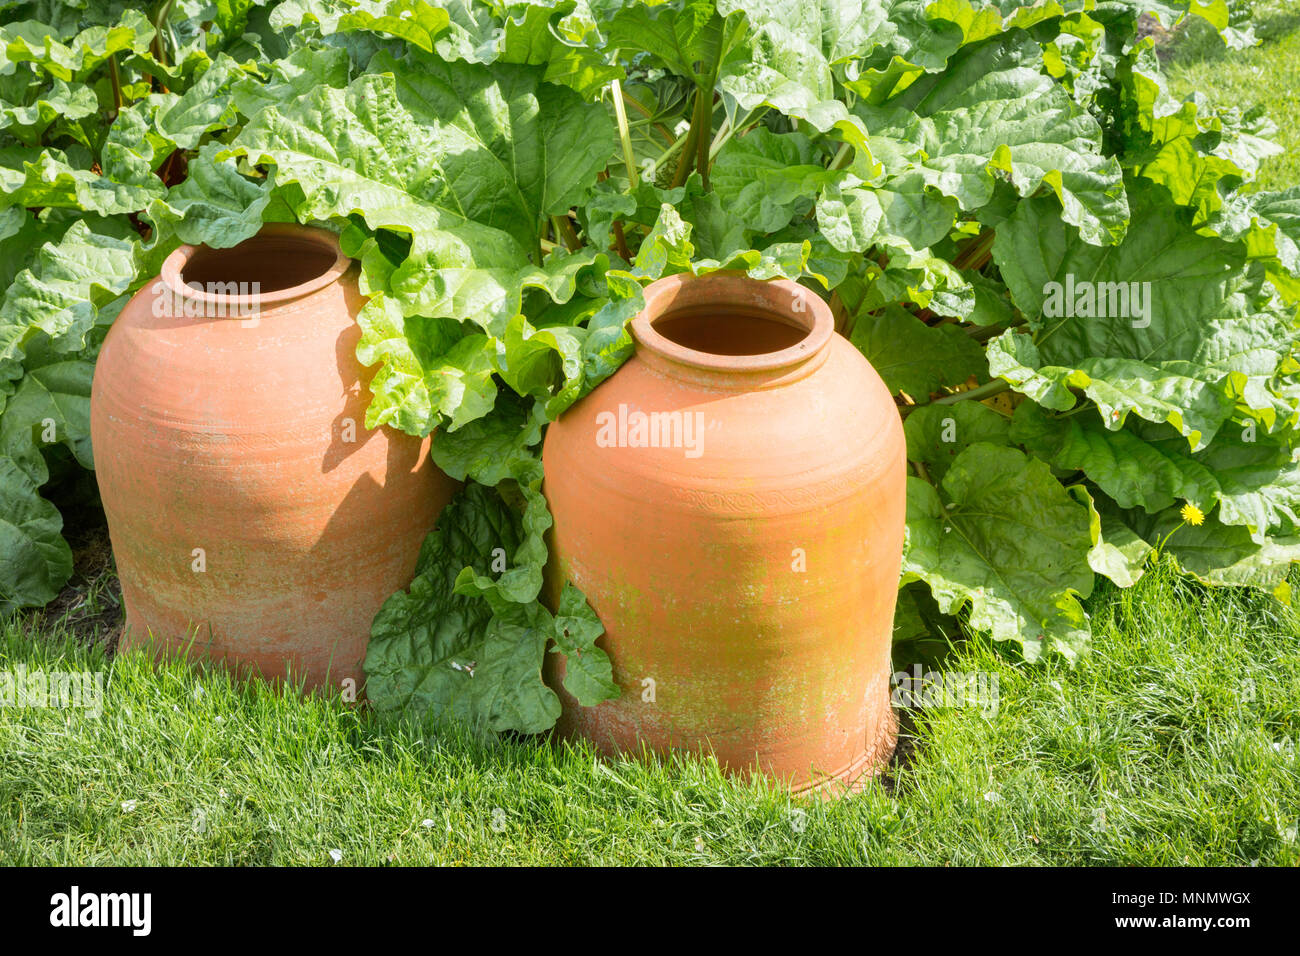 Two terracotta rhubarb forcing pots among rhubarb plants Stock Photo